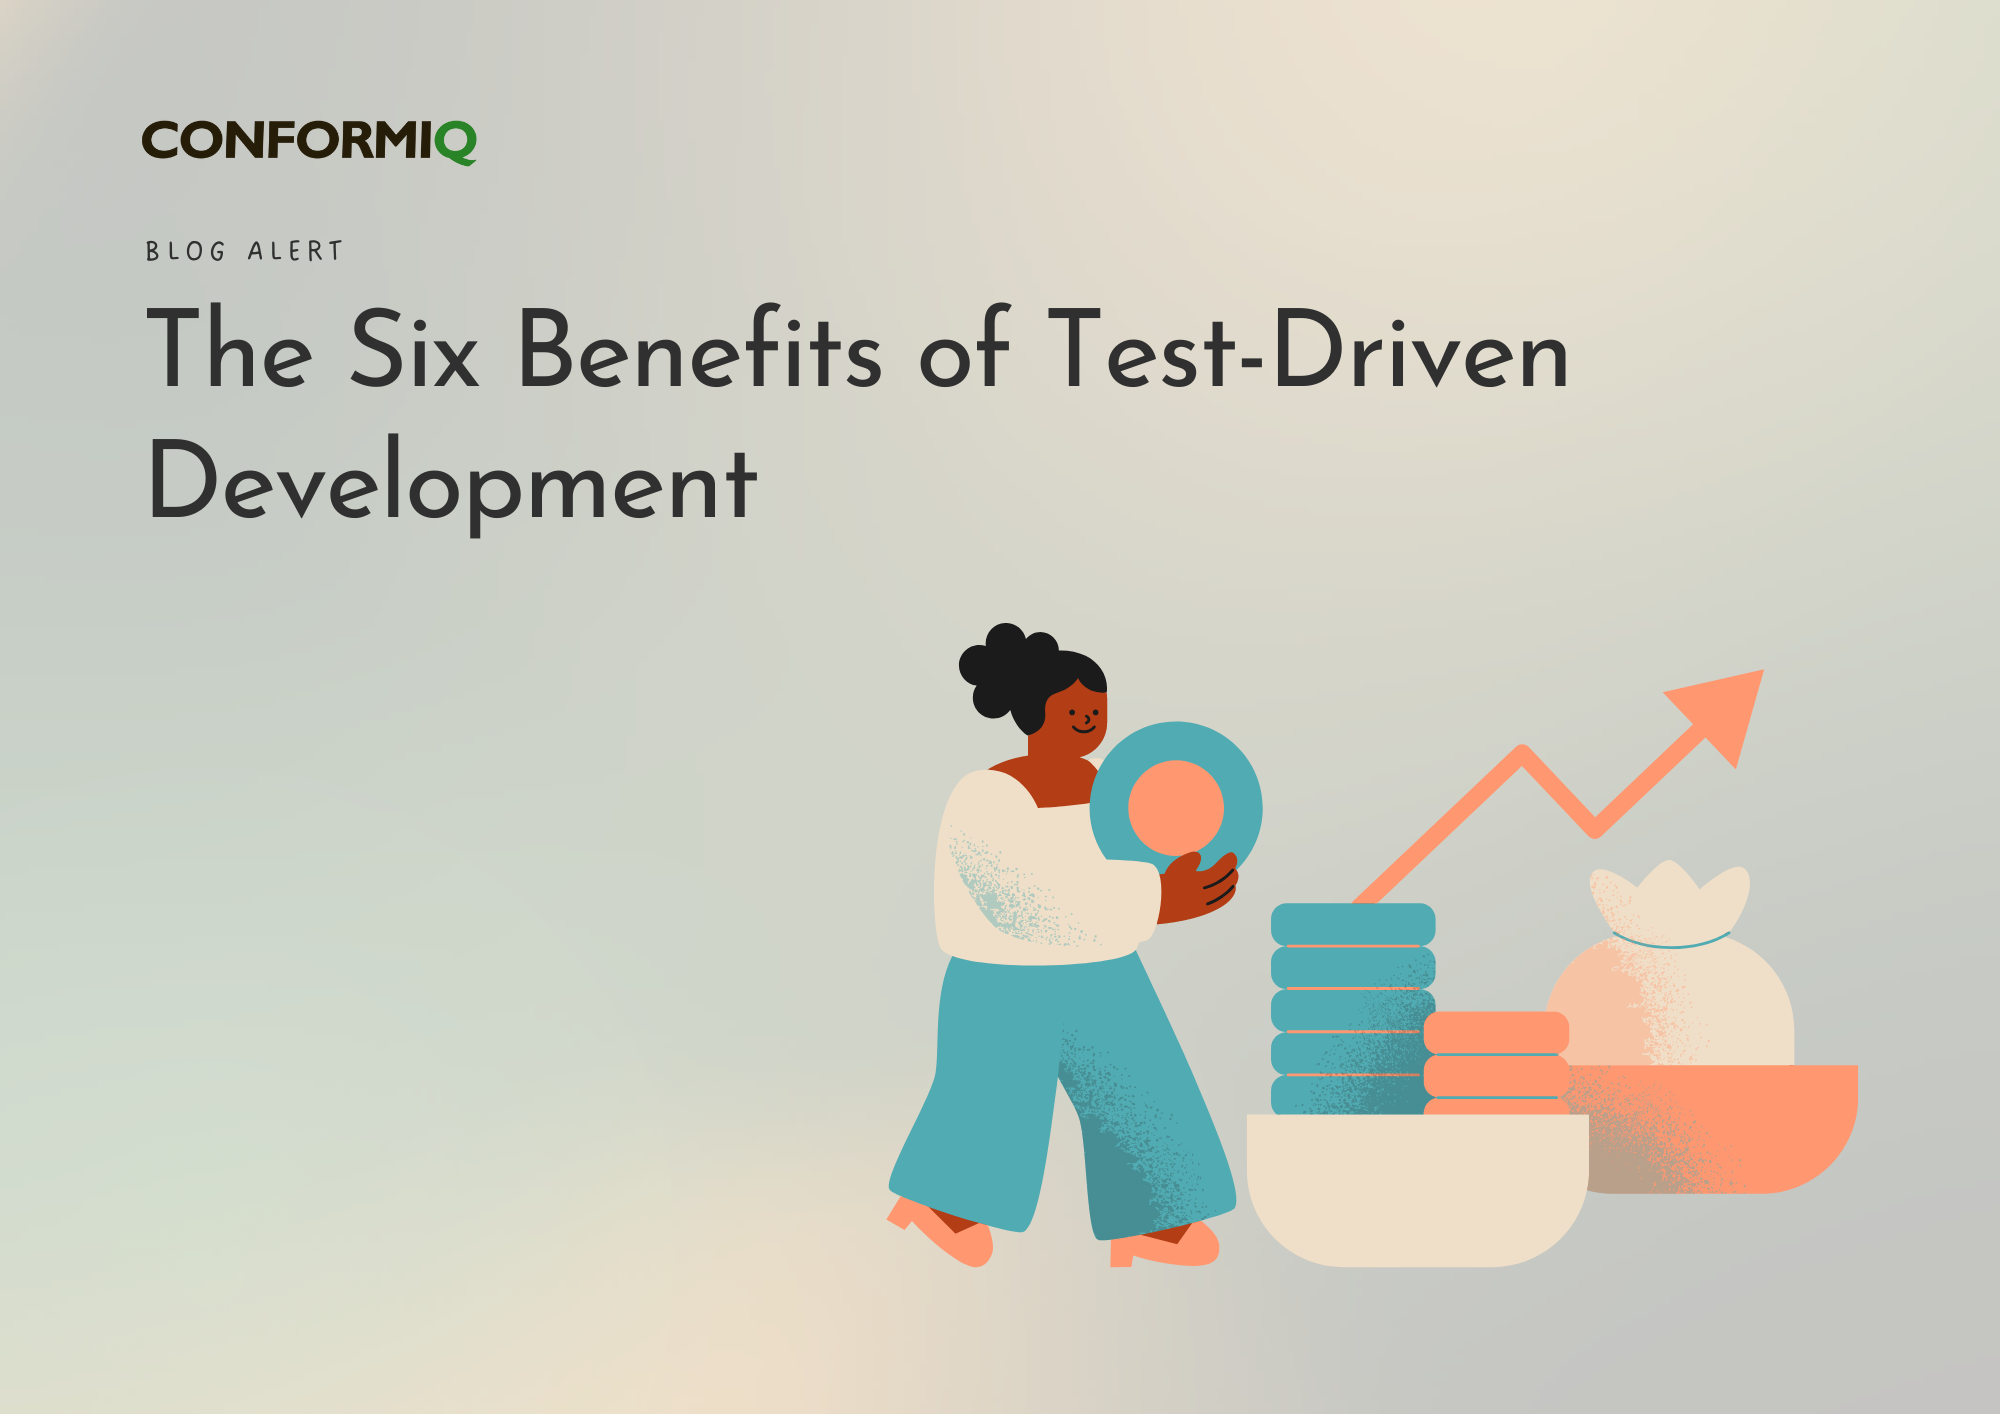 The Six Benefits of Test-Driven Development